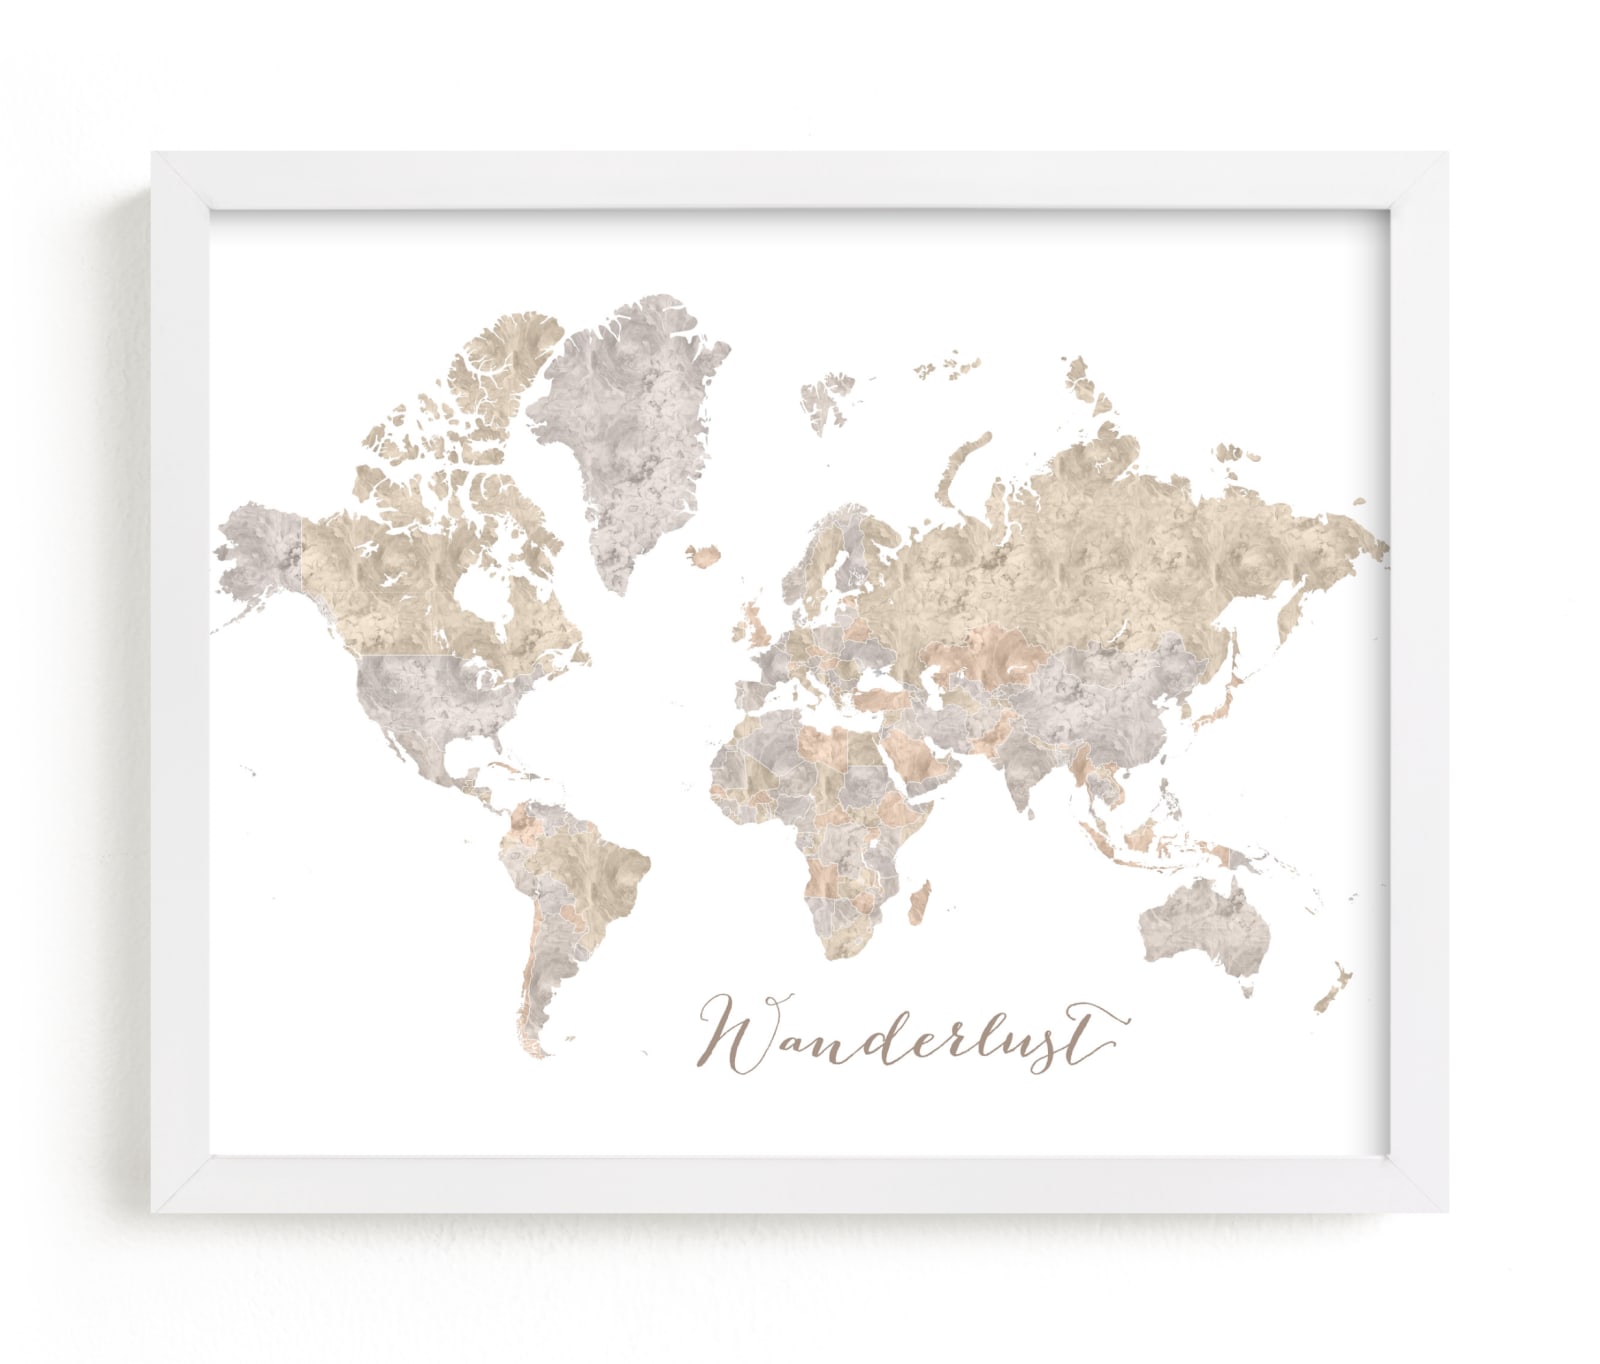 "Wanderlust world map" - Art Print by Rosana Laiz Blursbyai in beautiful frame options and a variety of sizes.